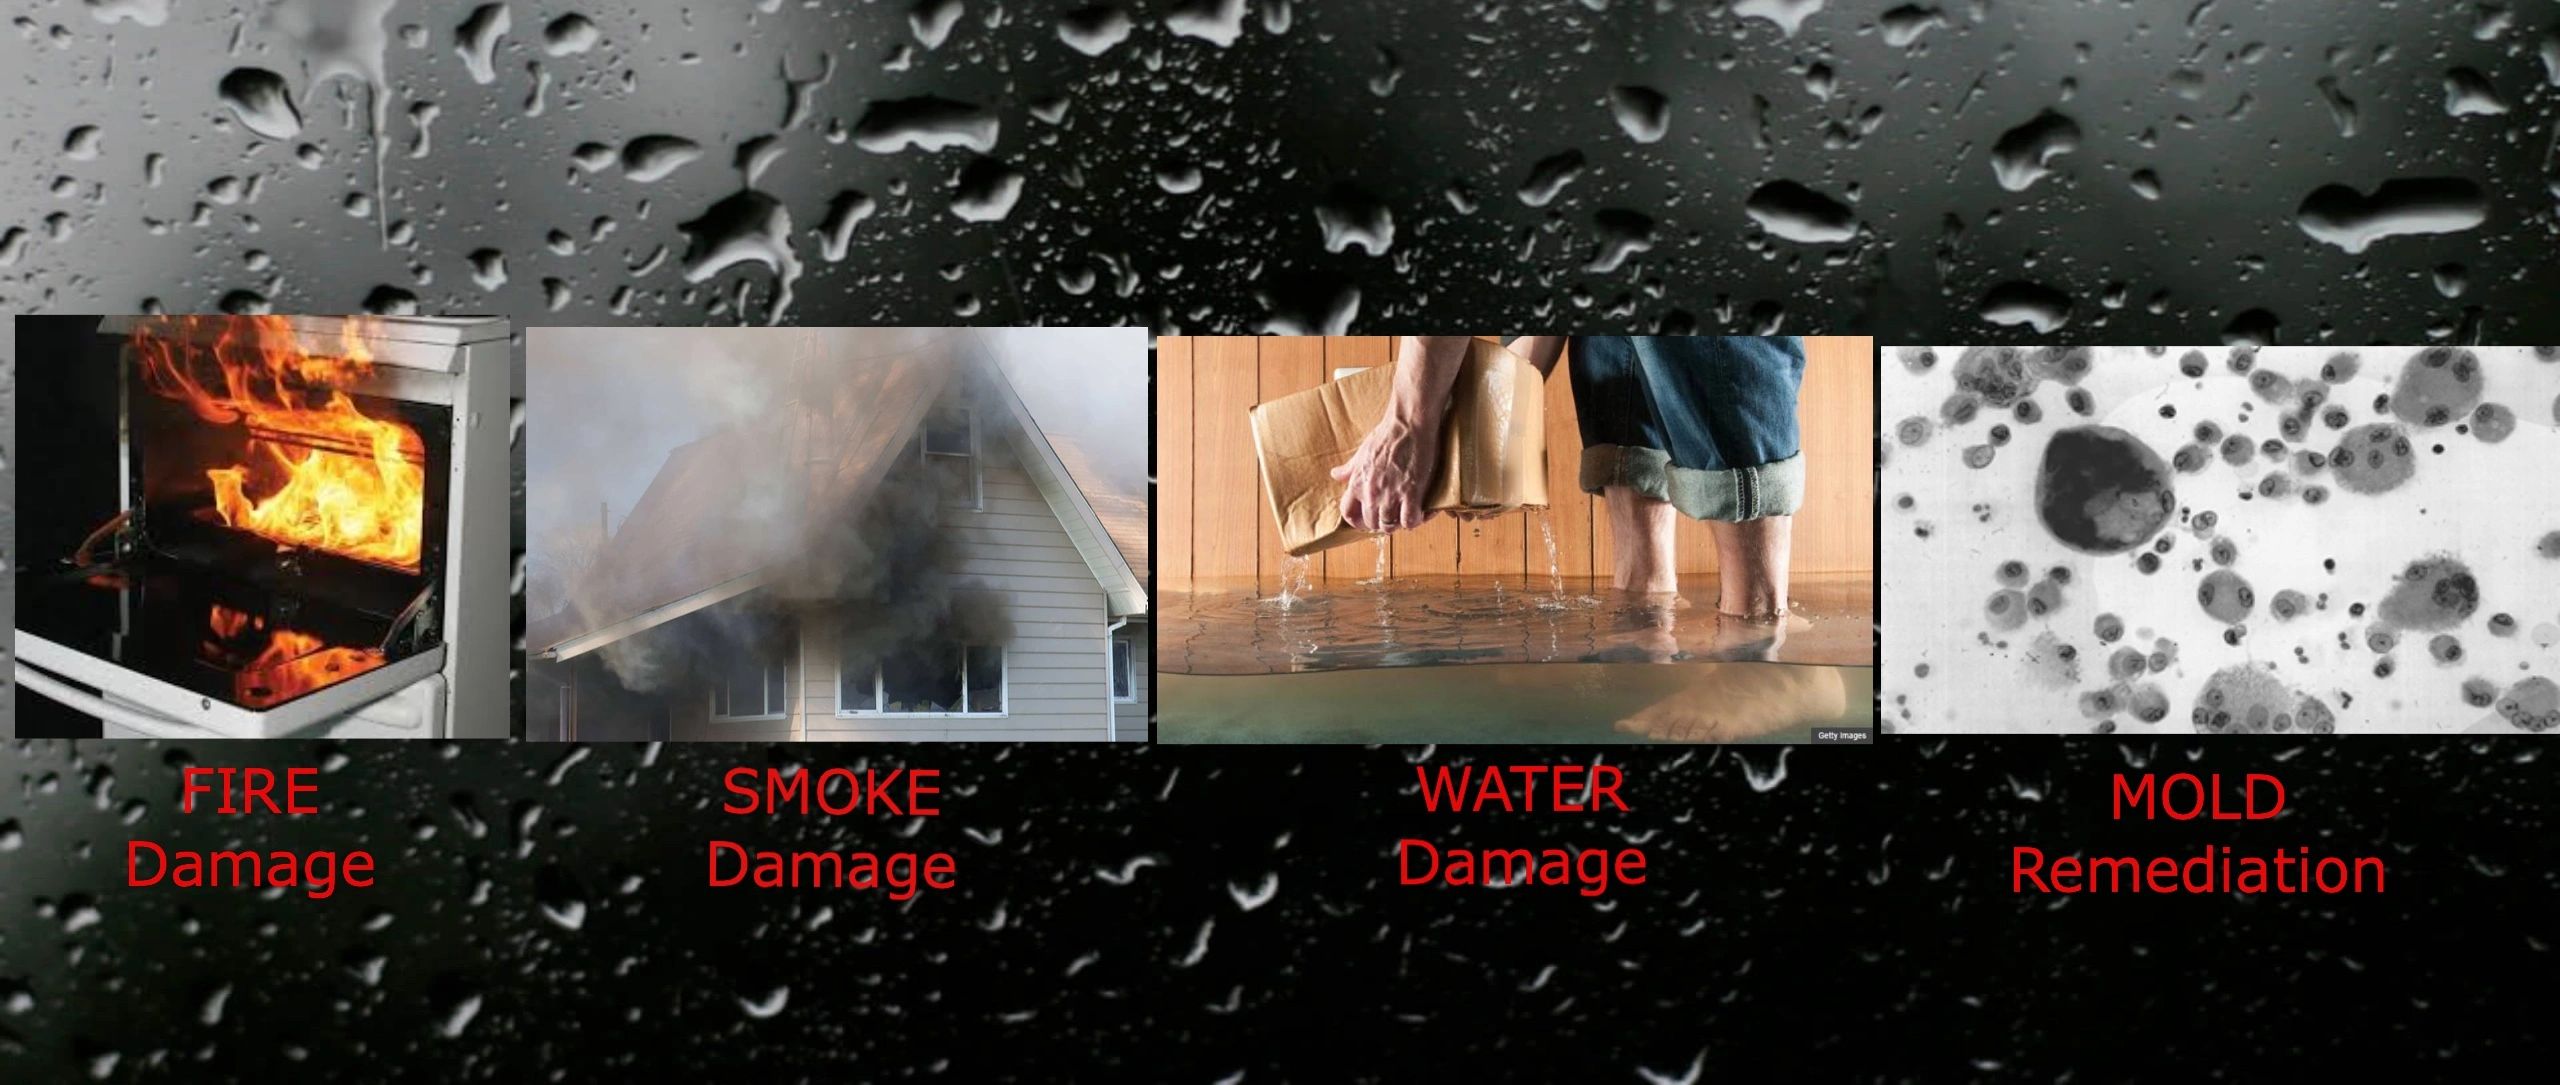 Fire damage, smoke damage, water damage, mold damage.